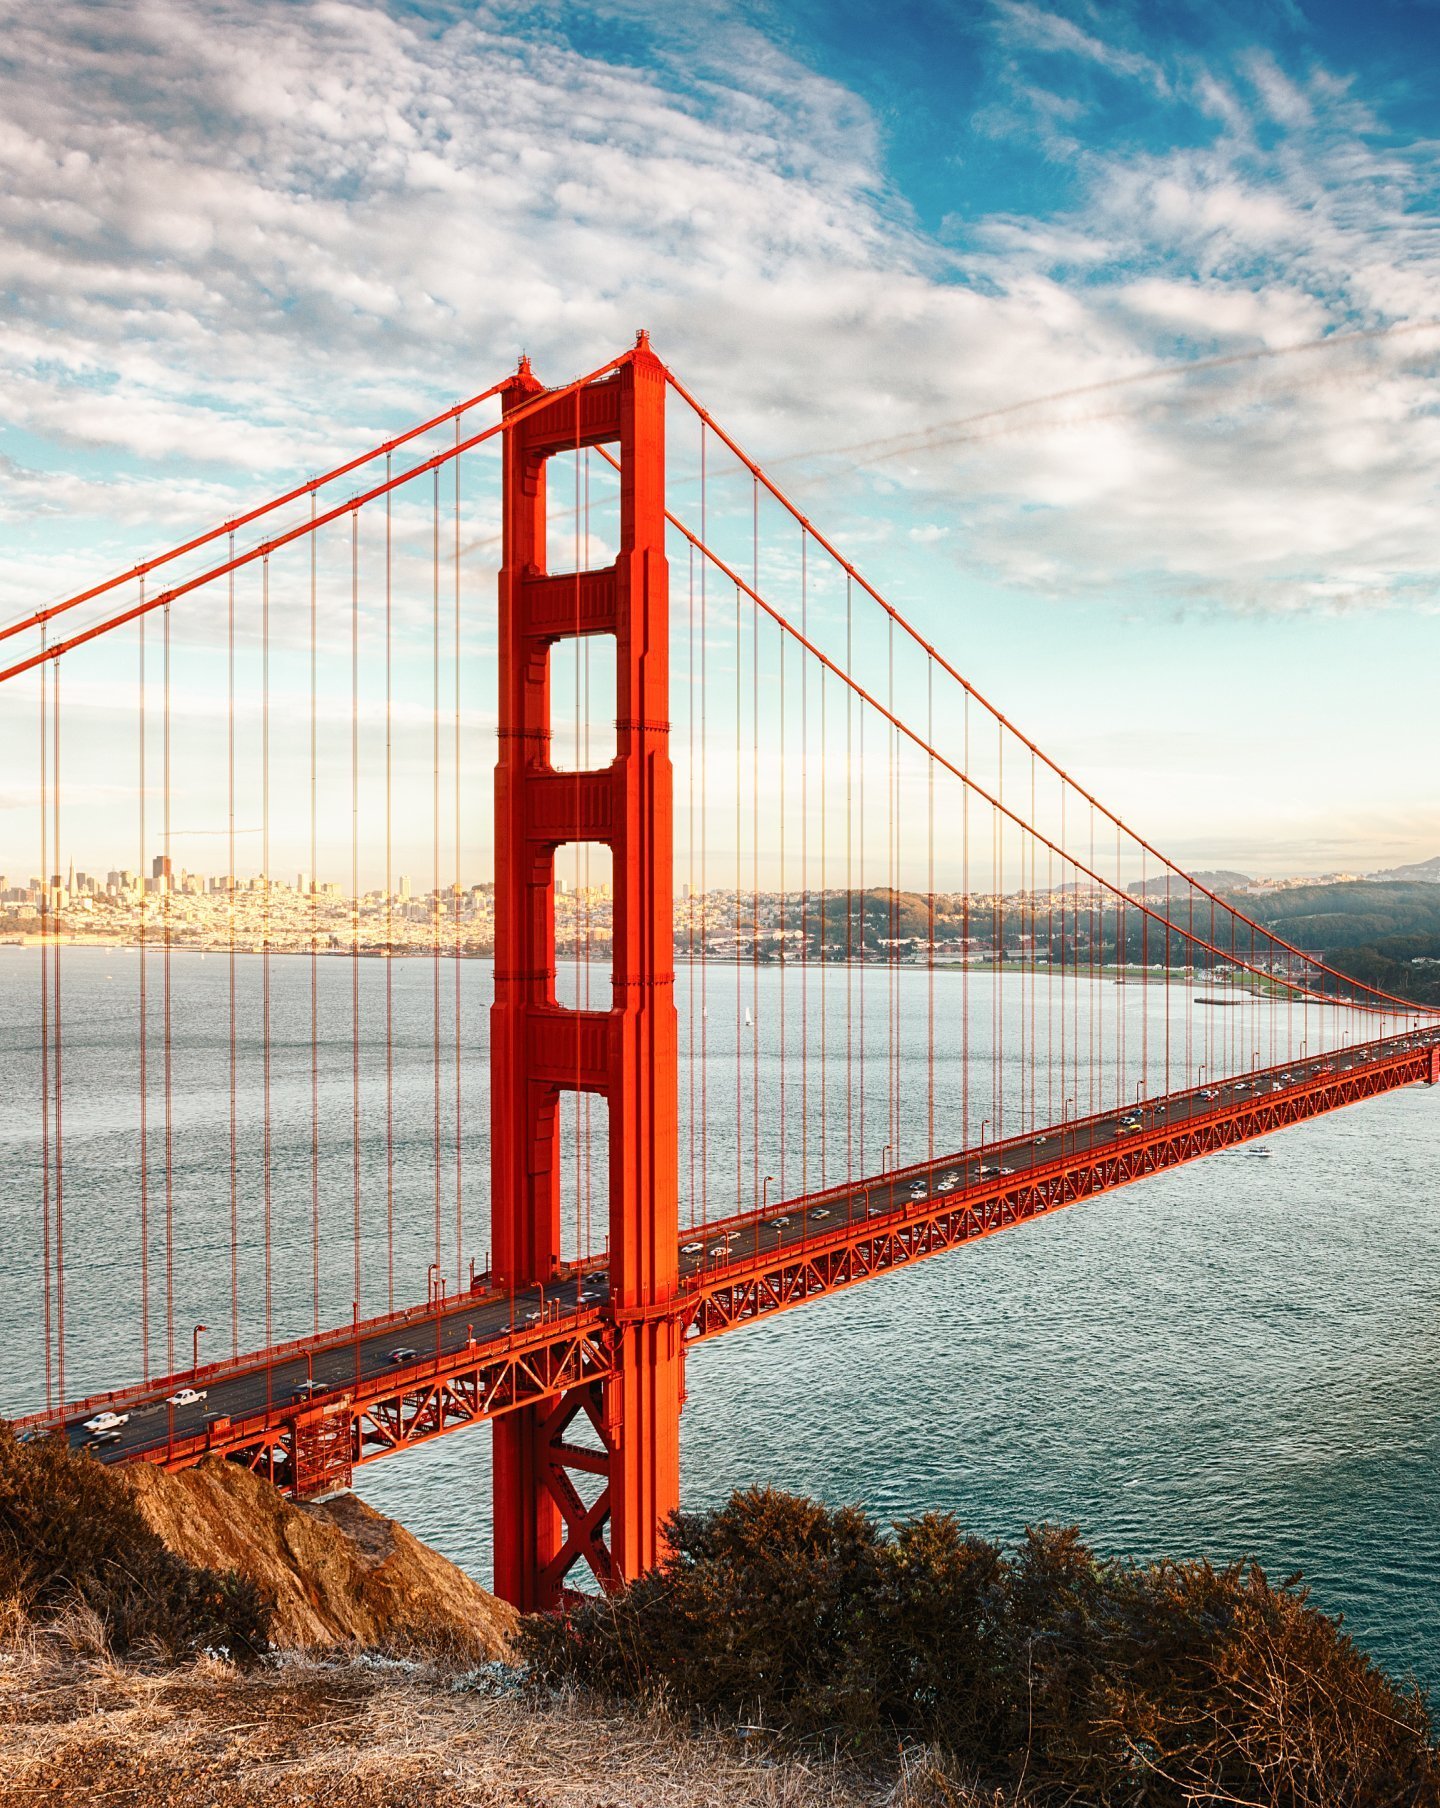 Golden Gate Bridge in California looking into the bay